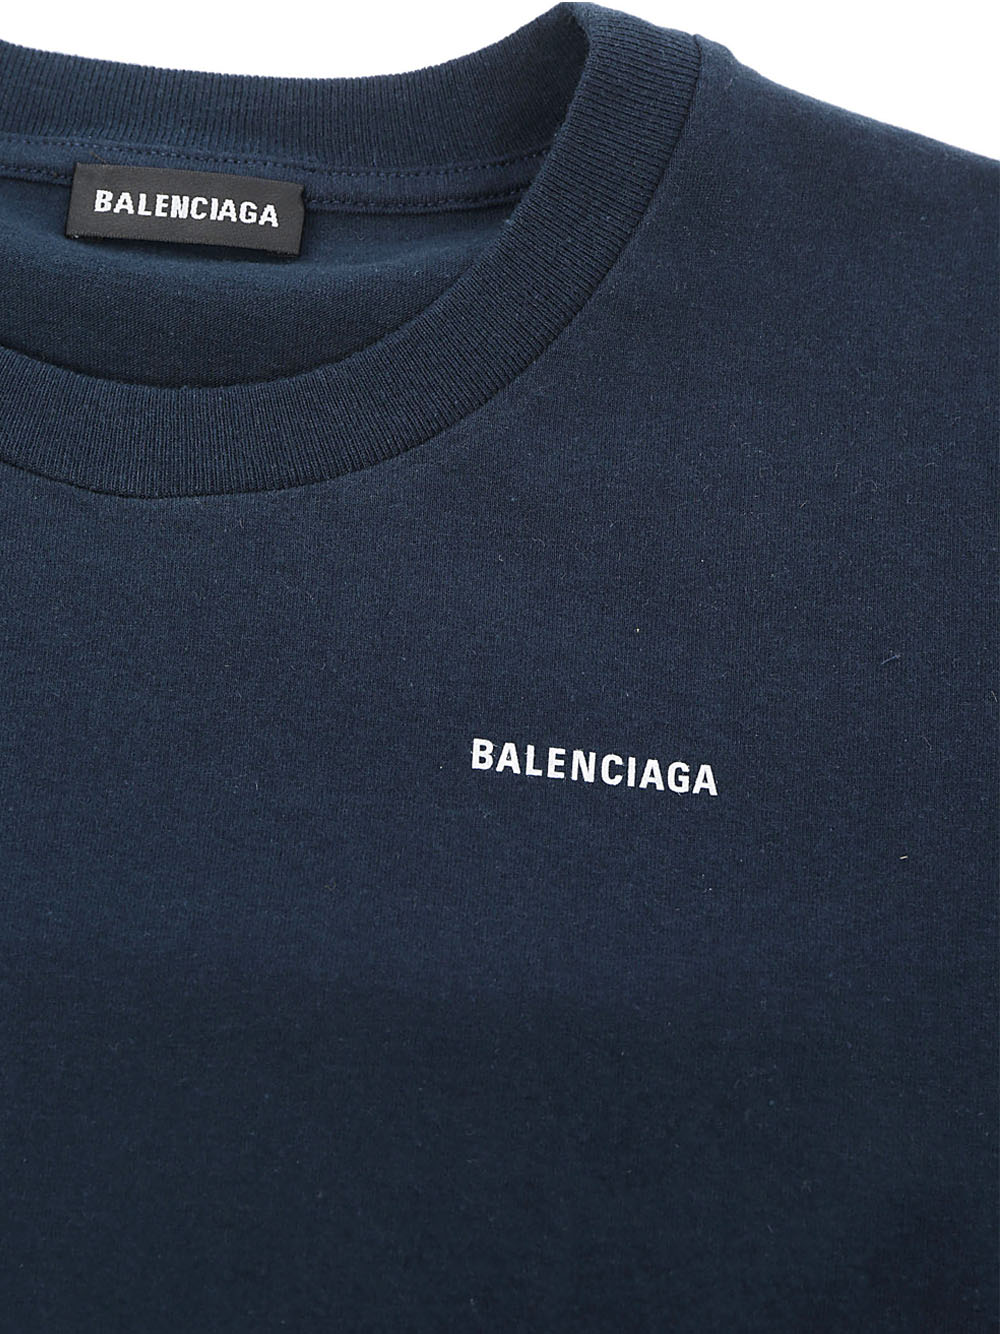 Buy Balenciaga Kids men navy blue logo printed tshirt for 200 online on  SV77 556155TGV738065